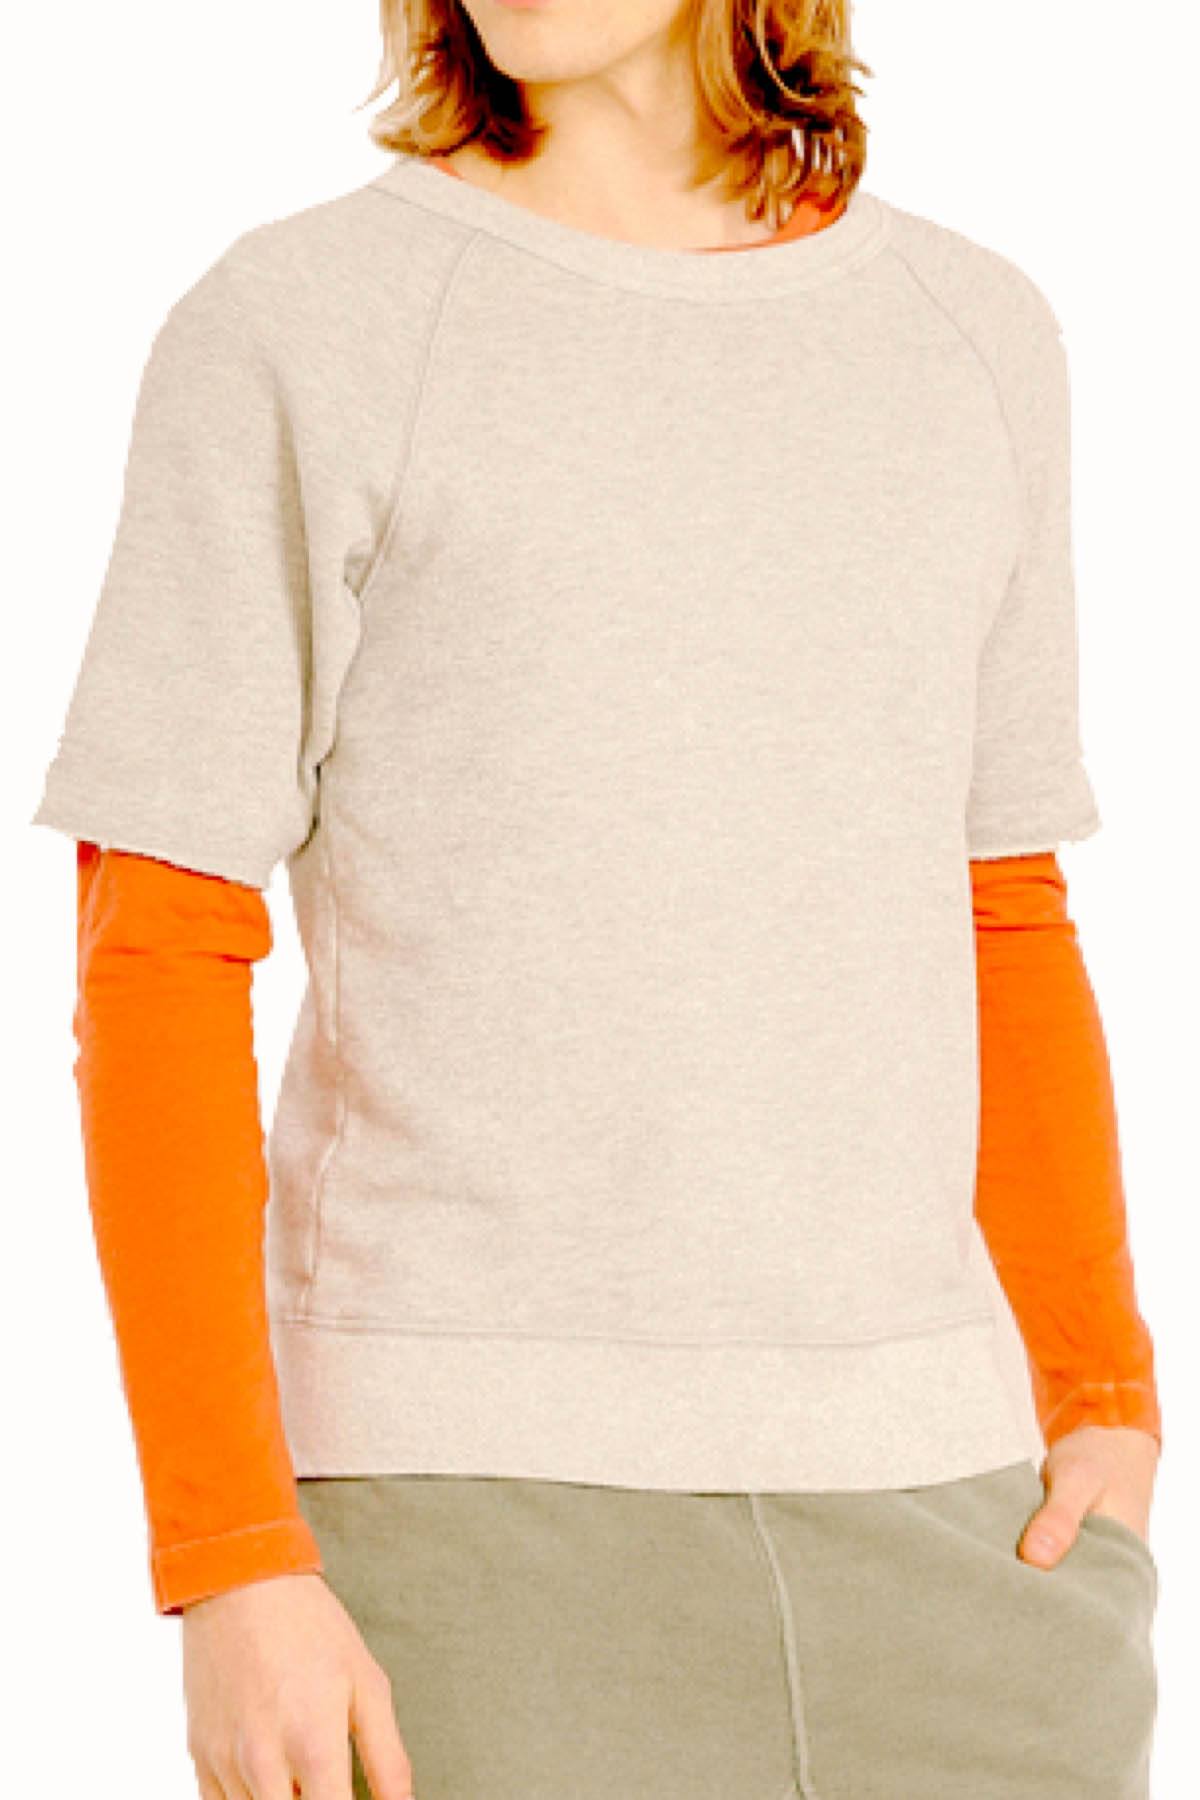 Rxmance Unisex Heather Grey Short Sleeve Sweatshirt